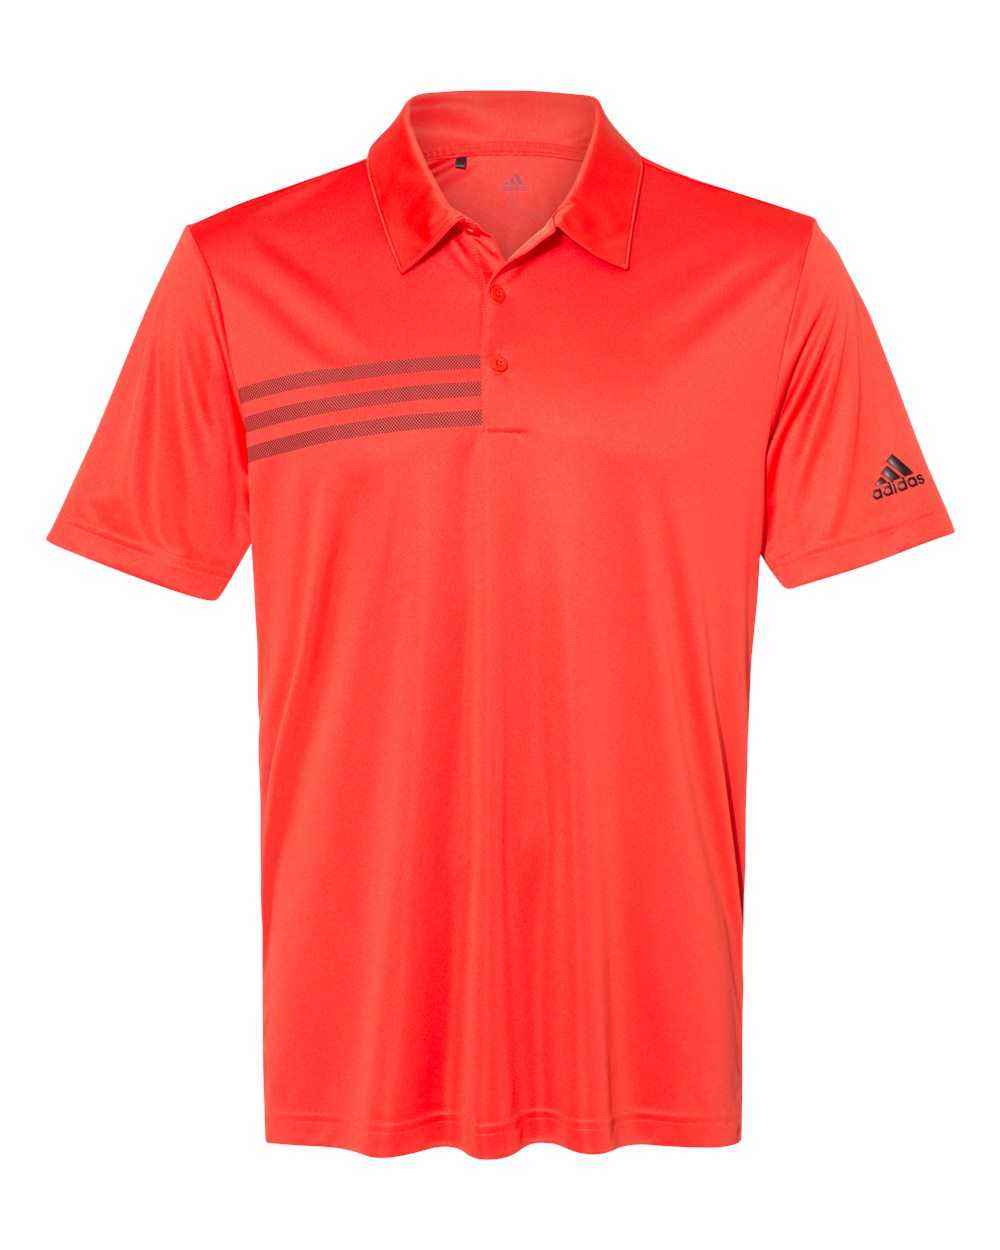 Adidas A324 3-Stripes Chest Sport Shirt - Blaze Orange Black